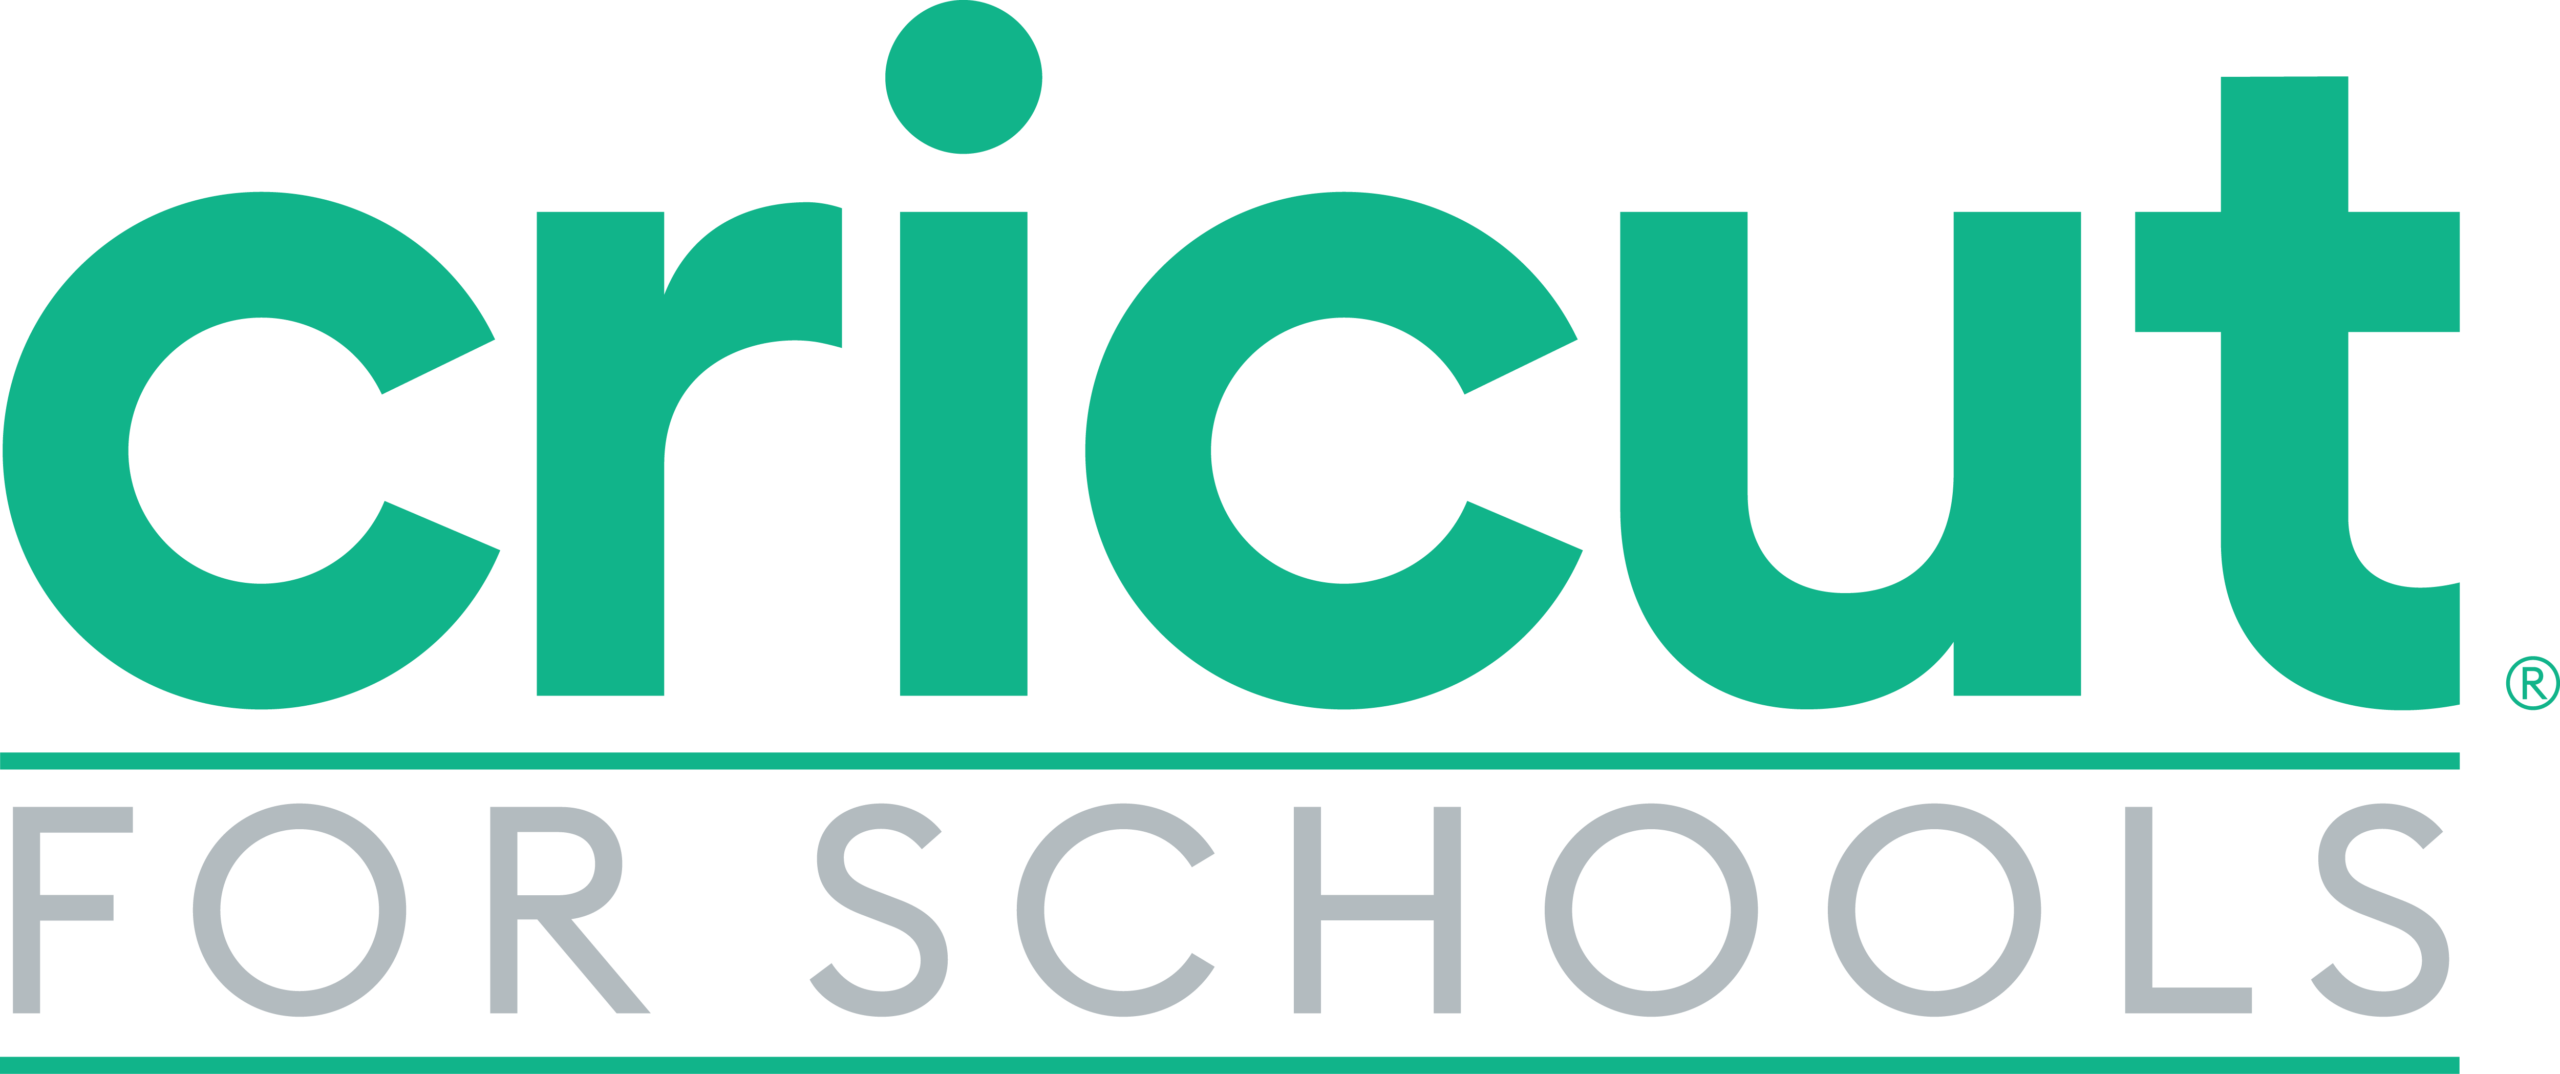 Cricut_Logo_US_LRG_GRN_Schools